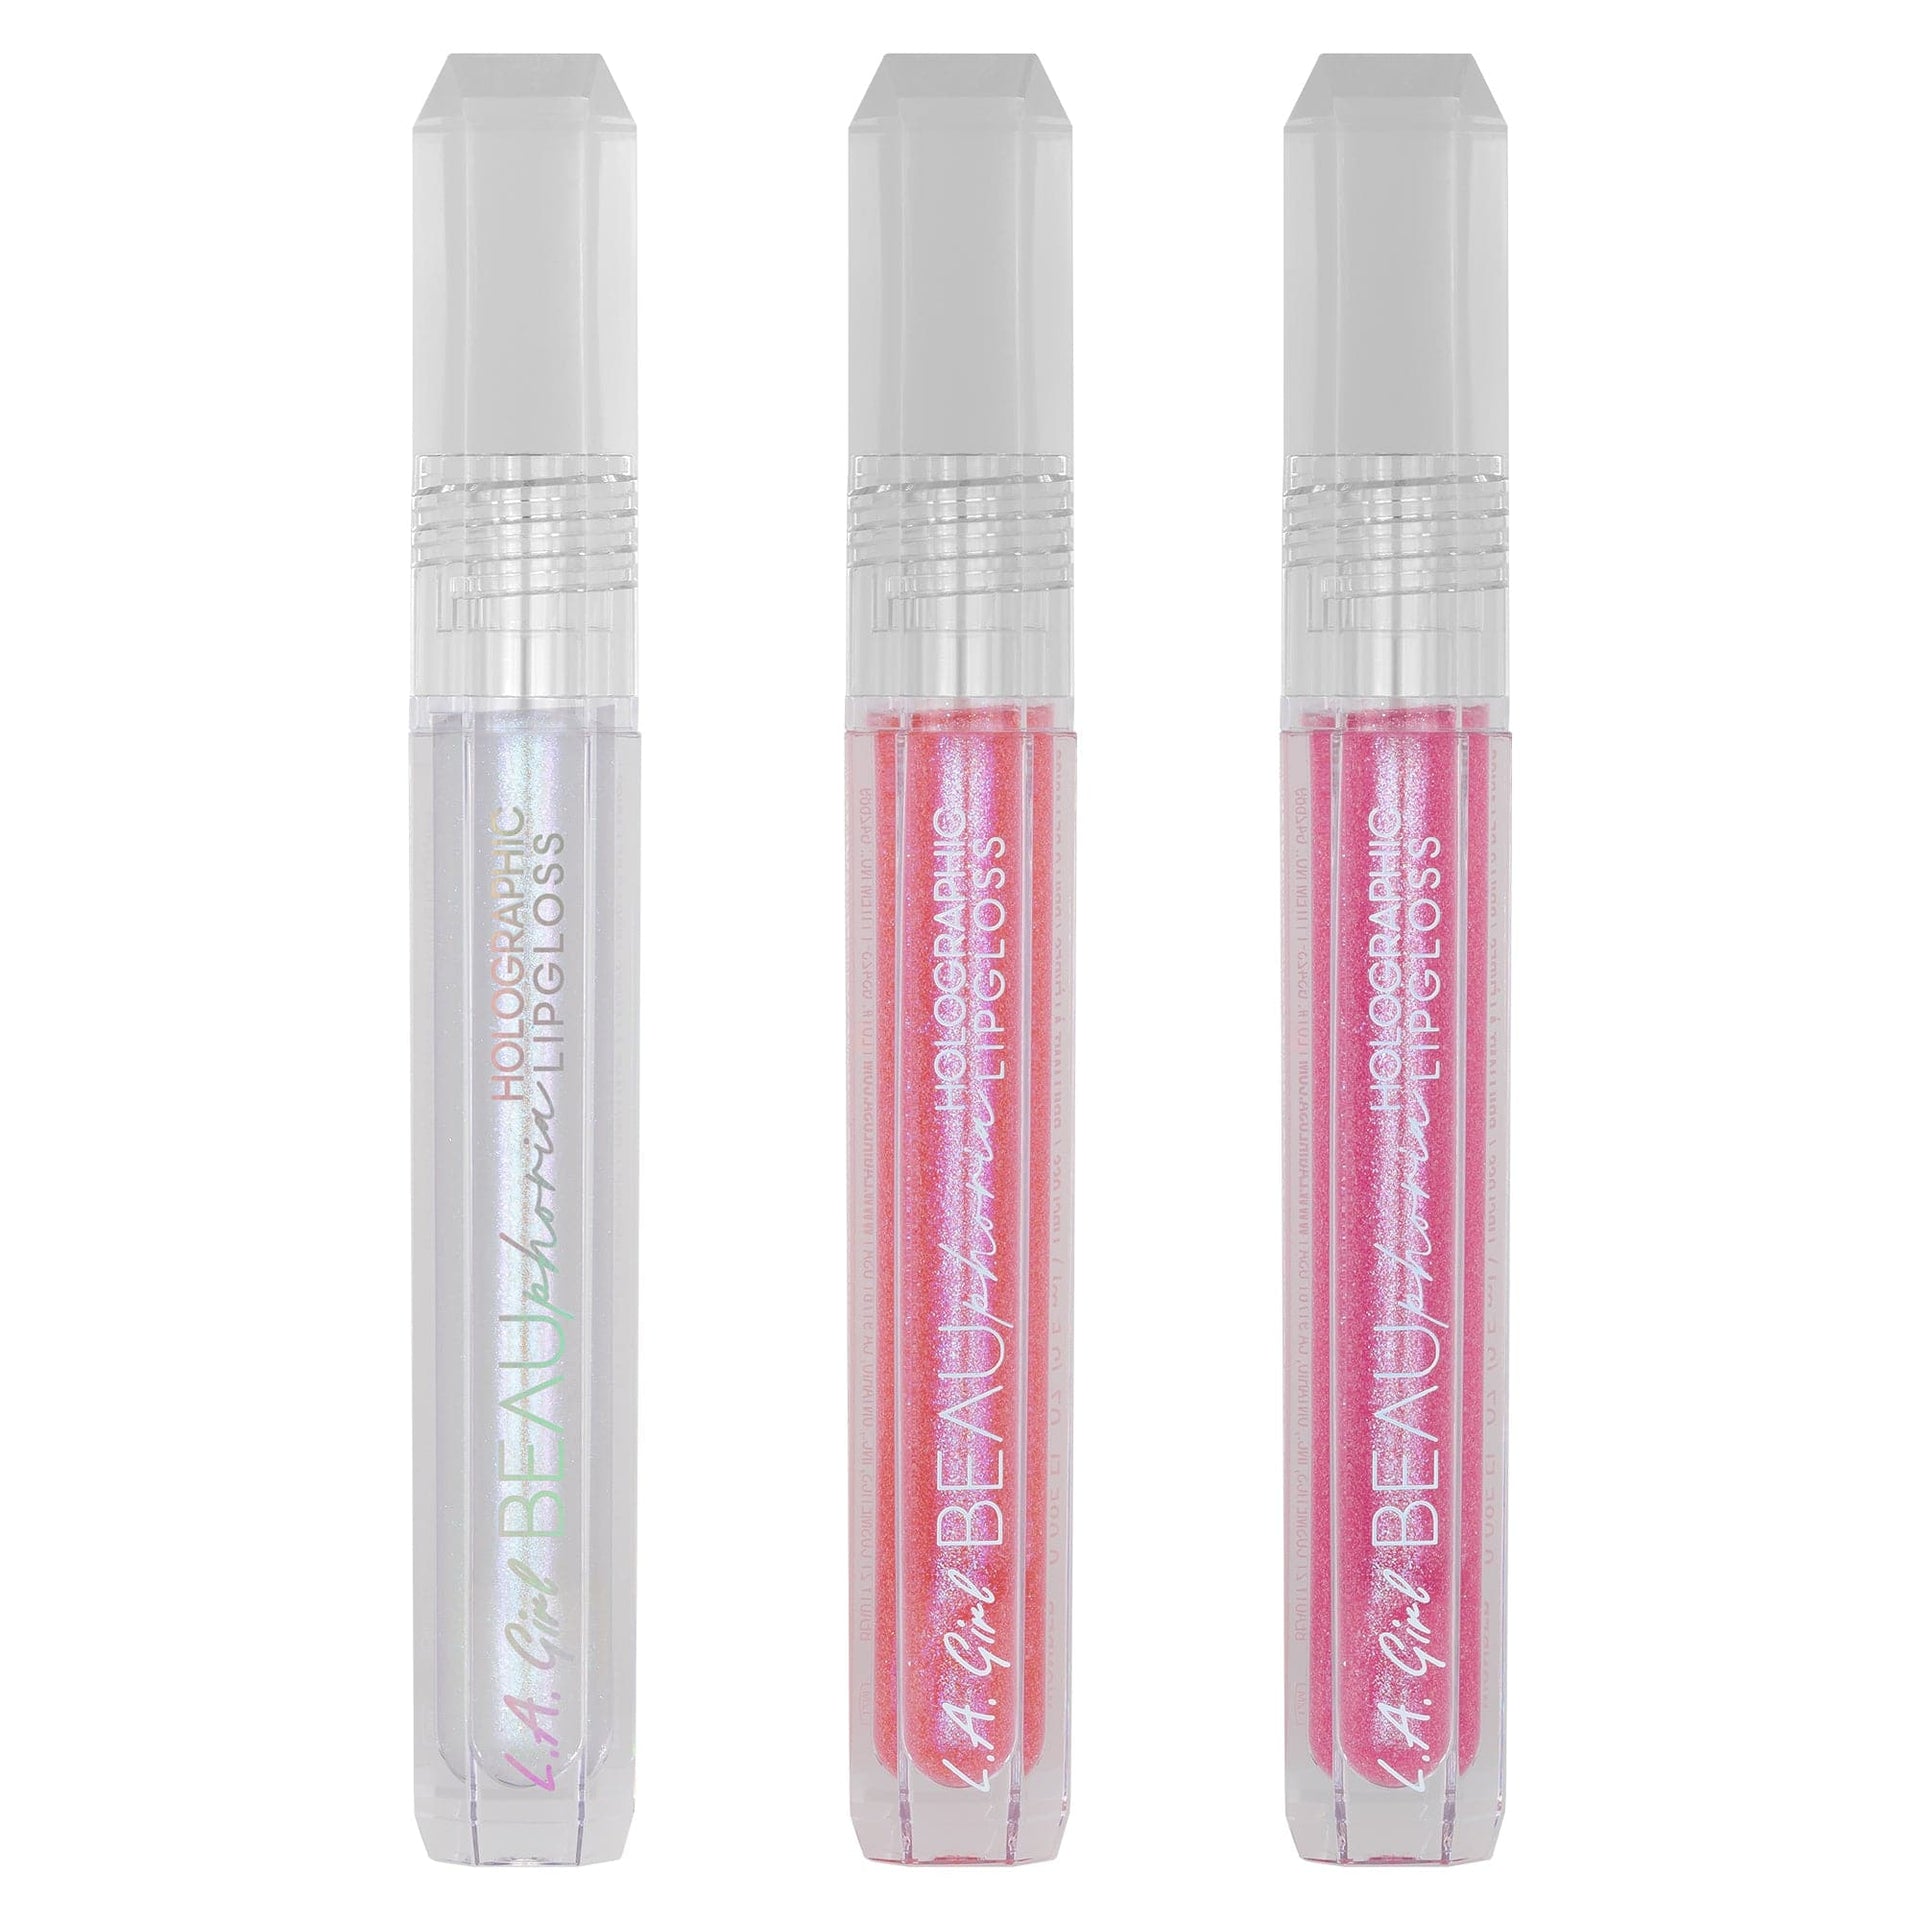 Beauphoria 3pc Sparkly Lip Gloss Set 